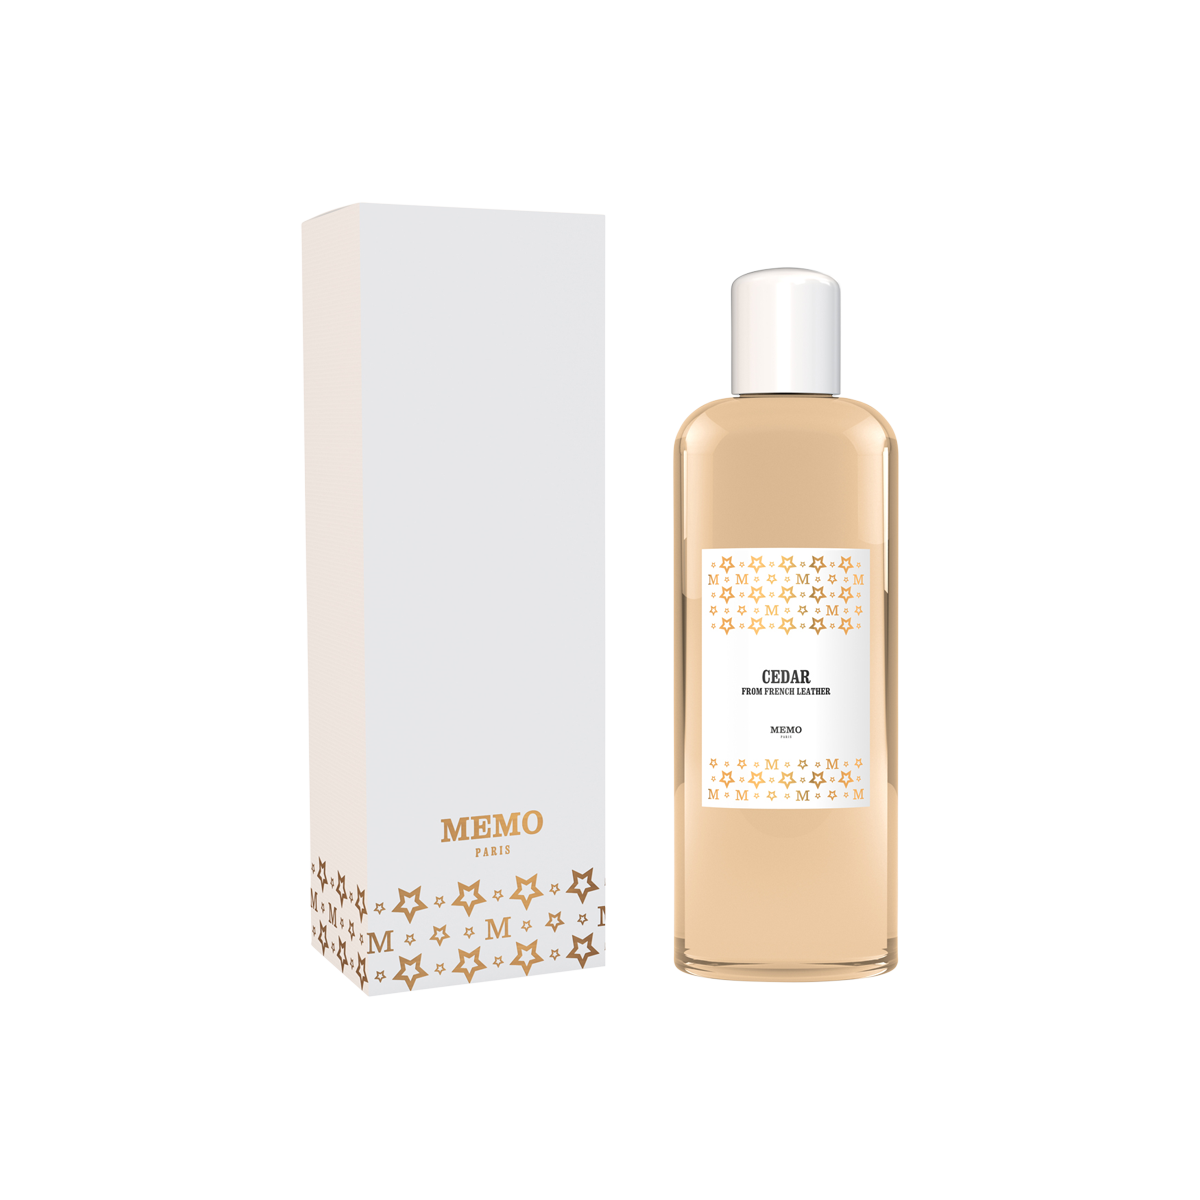 Memo Paris - Fragrance Diffuser Refill Box Cedar